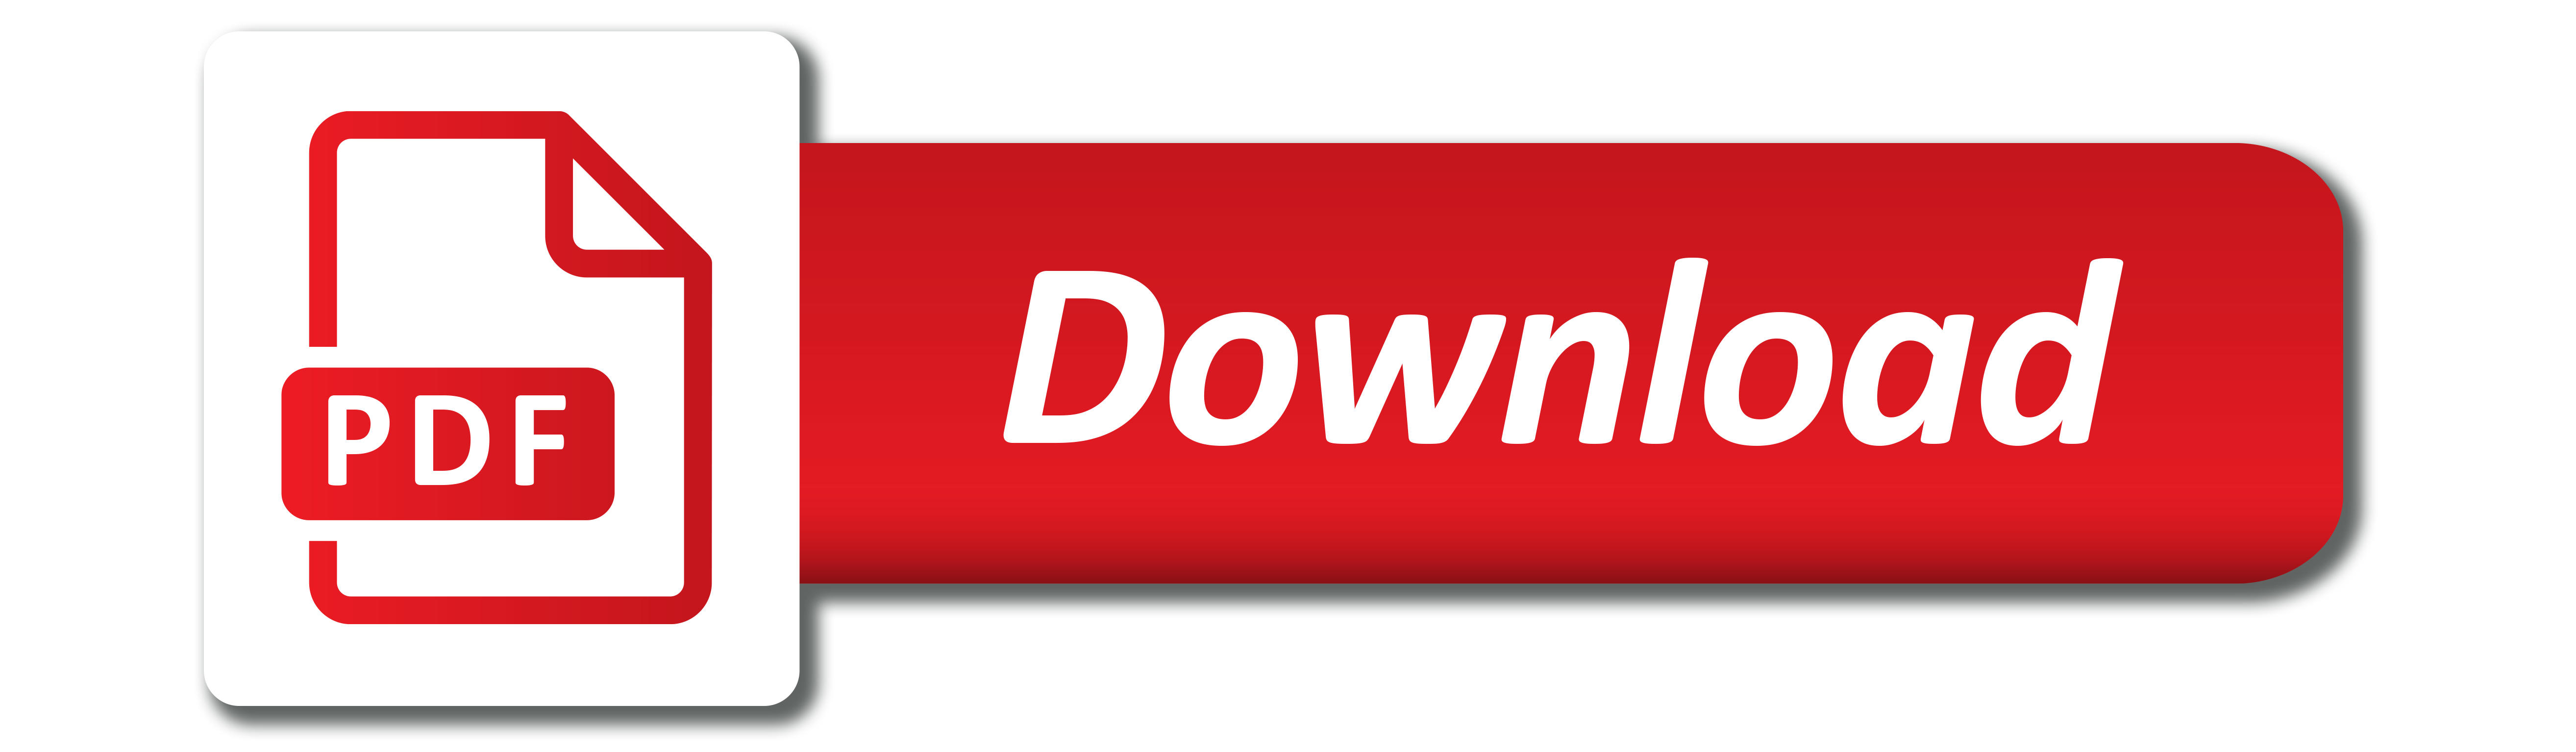 Downloadable PDF Button PNG HD Image